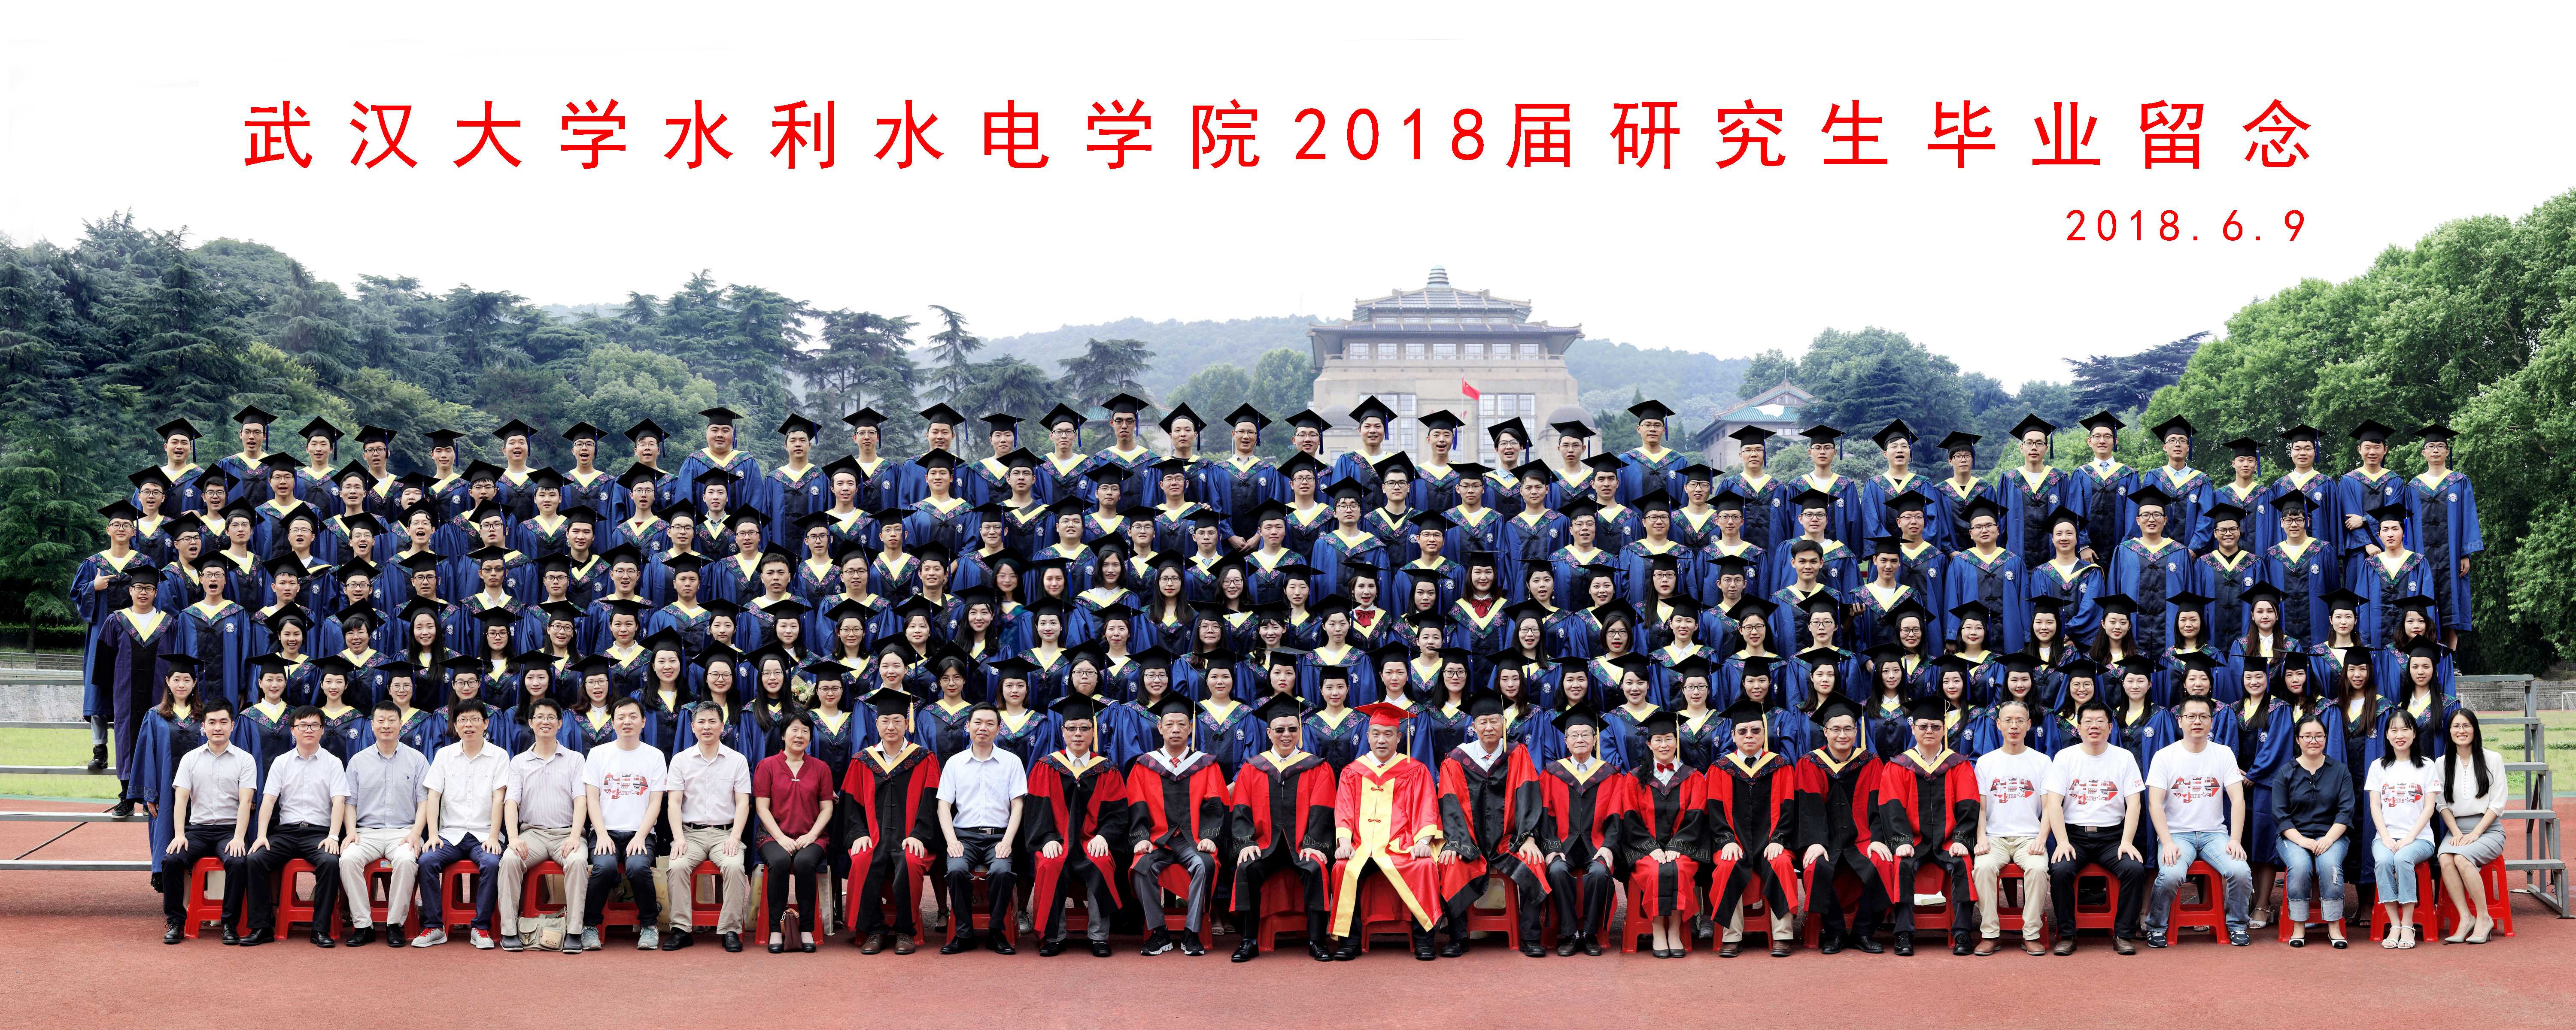 8x20 武汉大学水利水电学院2018届研究生毕业留念  2018.6.jpg